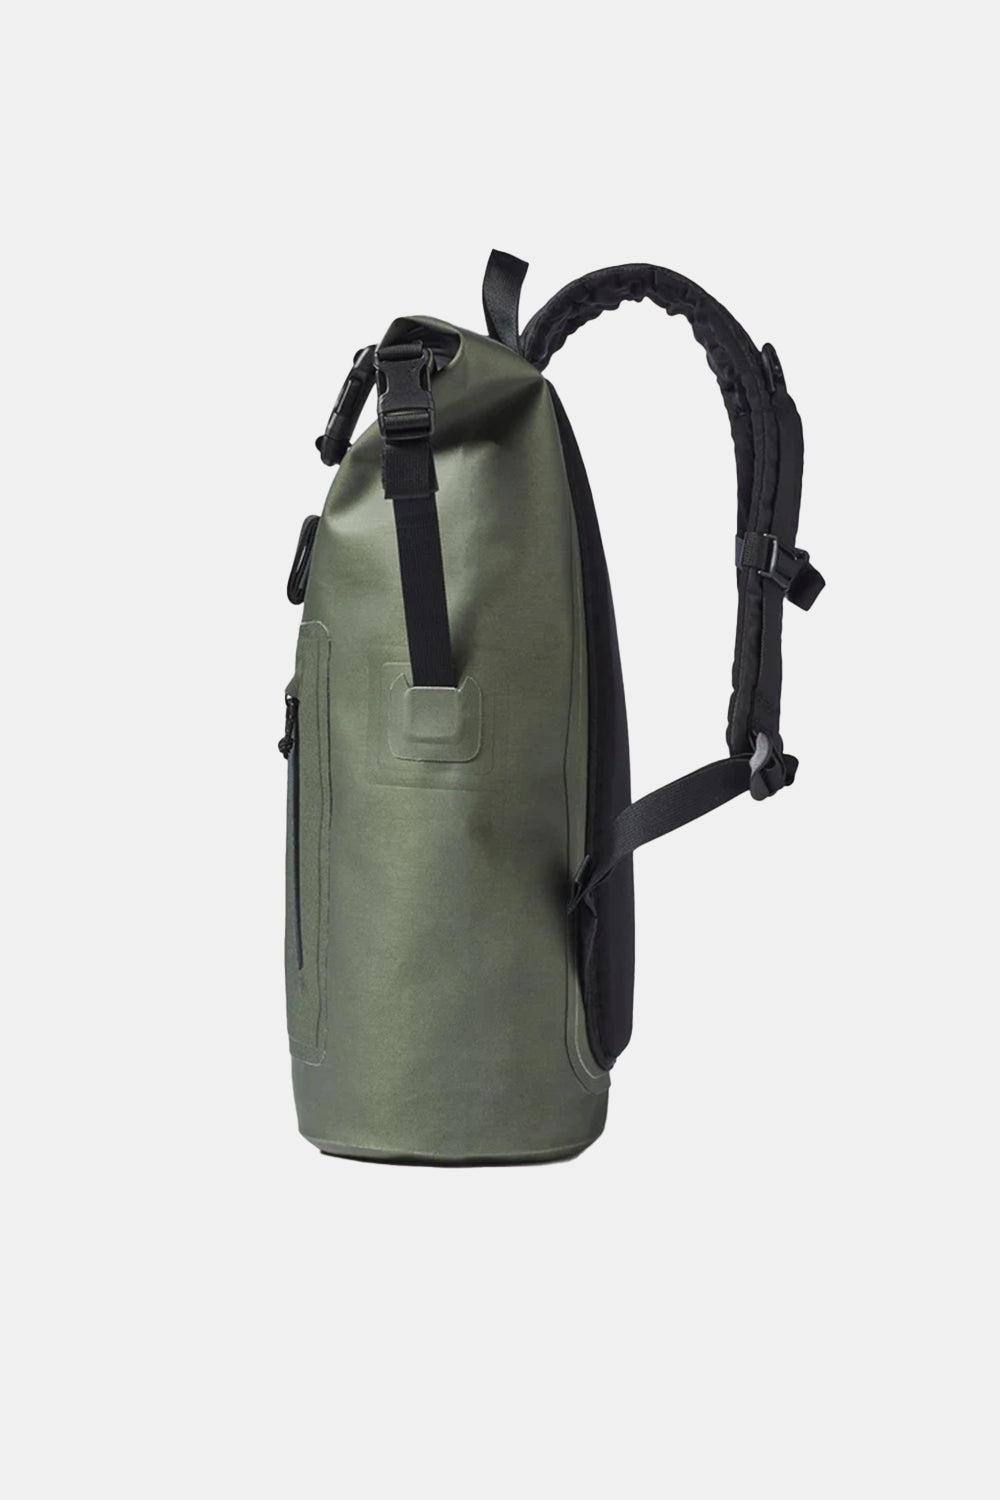 Filson Waterproof Dry Backpack (Green)